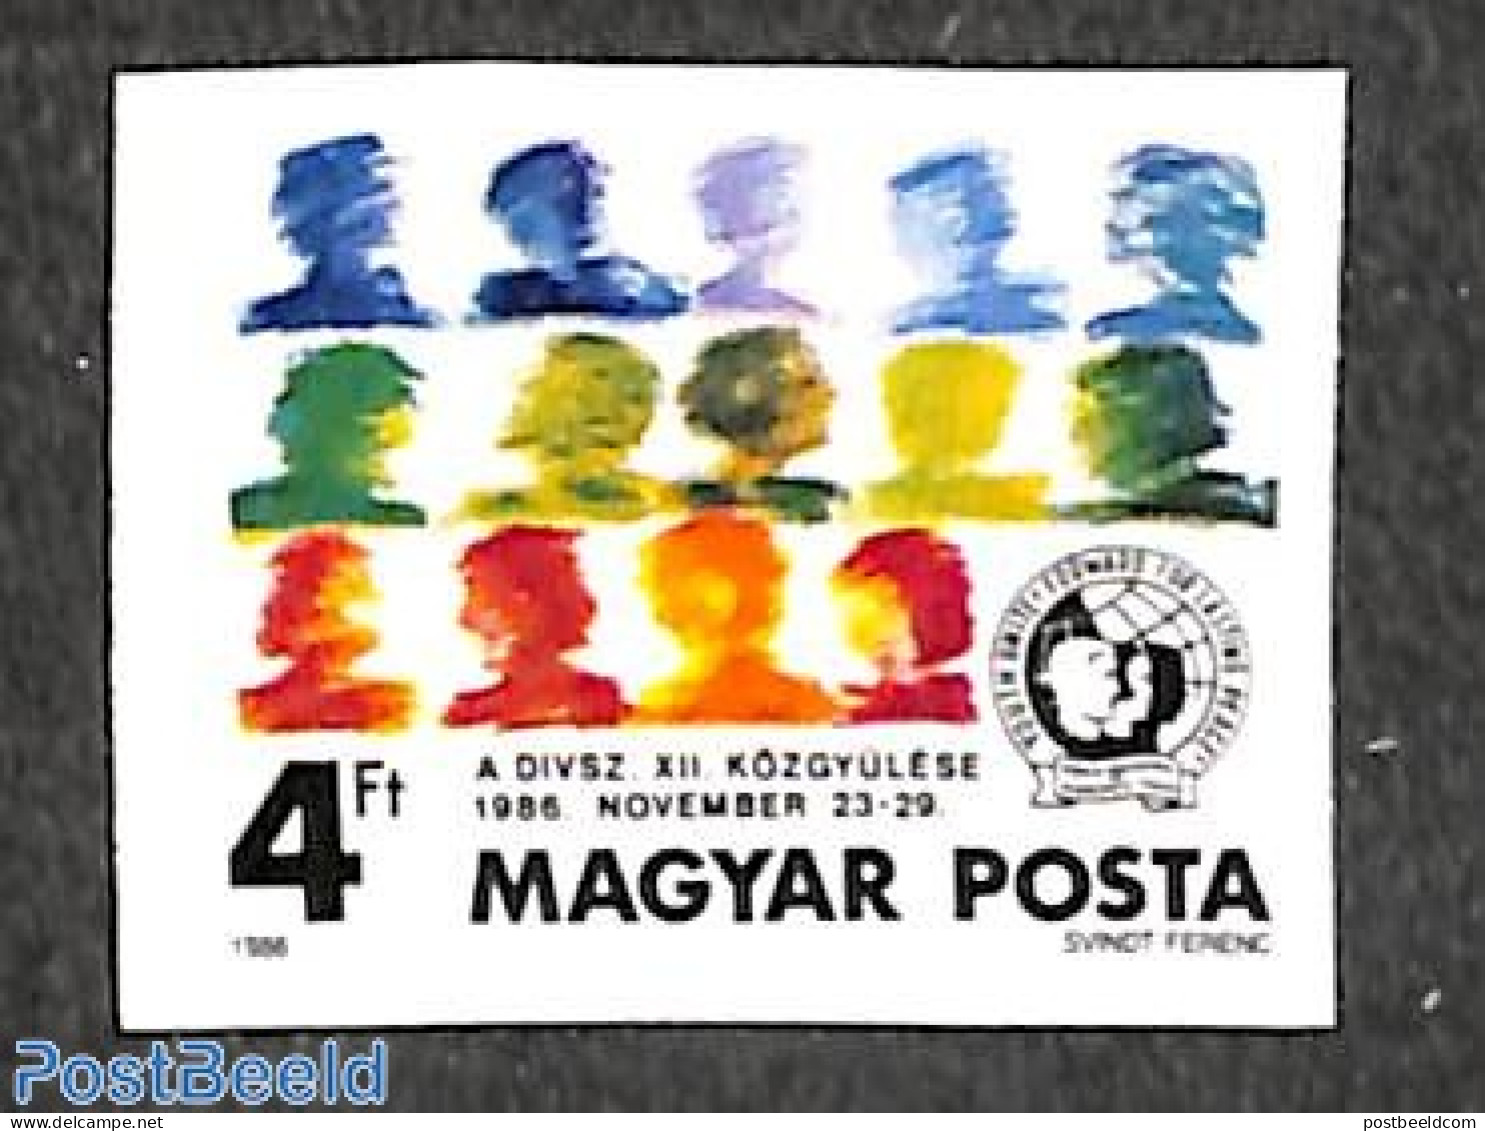 Hungary 1986 World Youth Association 1v Imperforated, Mint NH - Ongebruikt